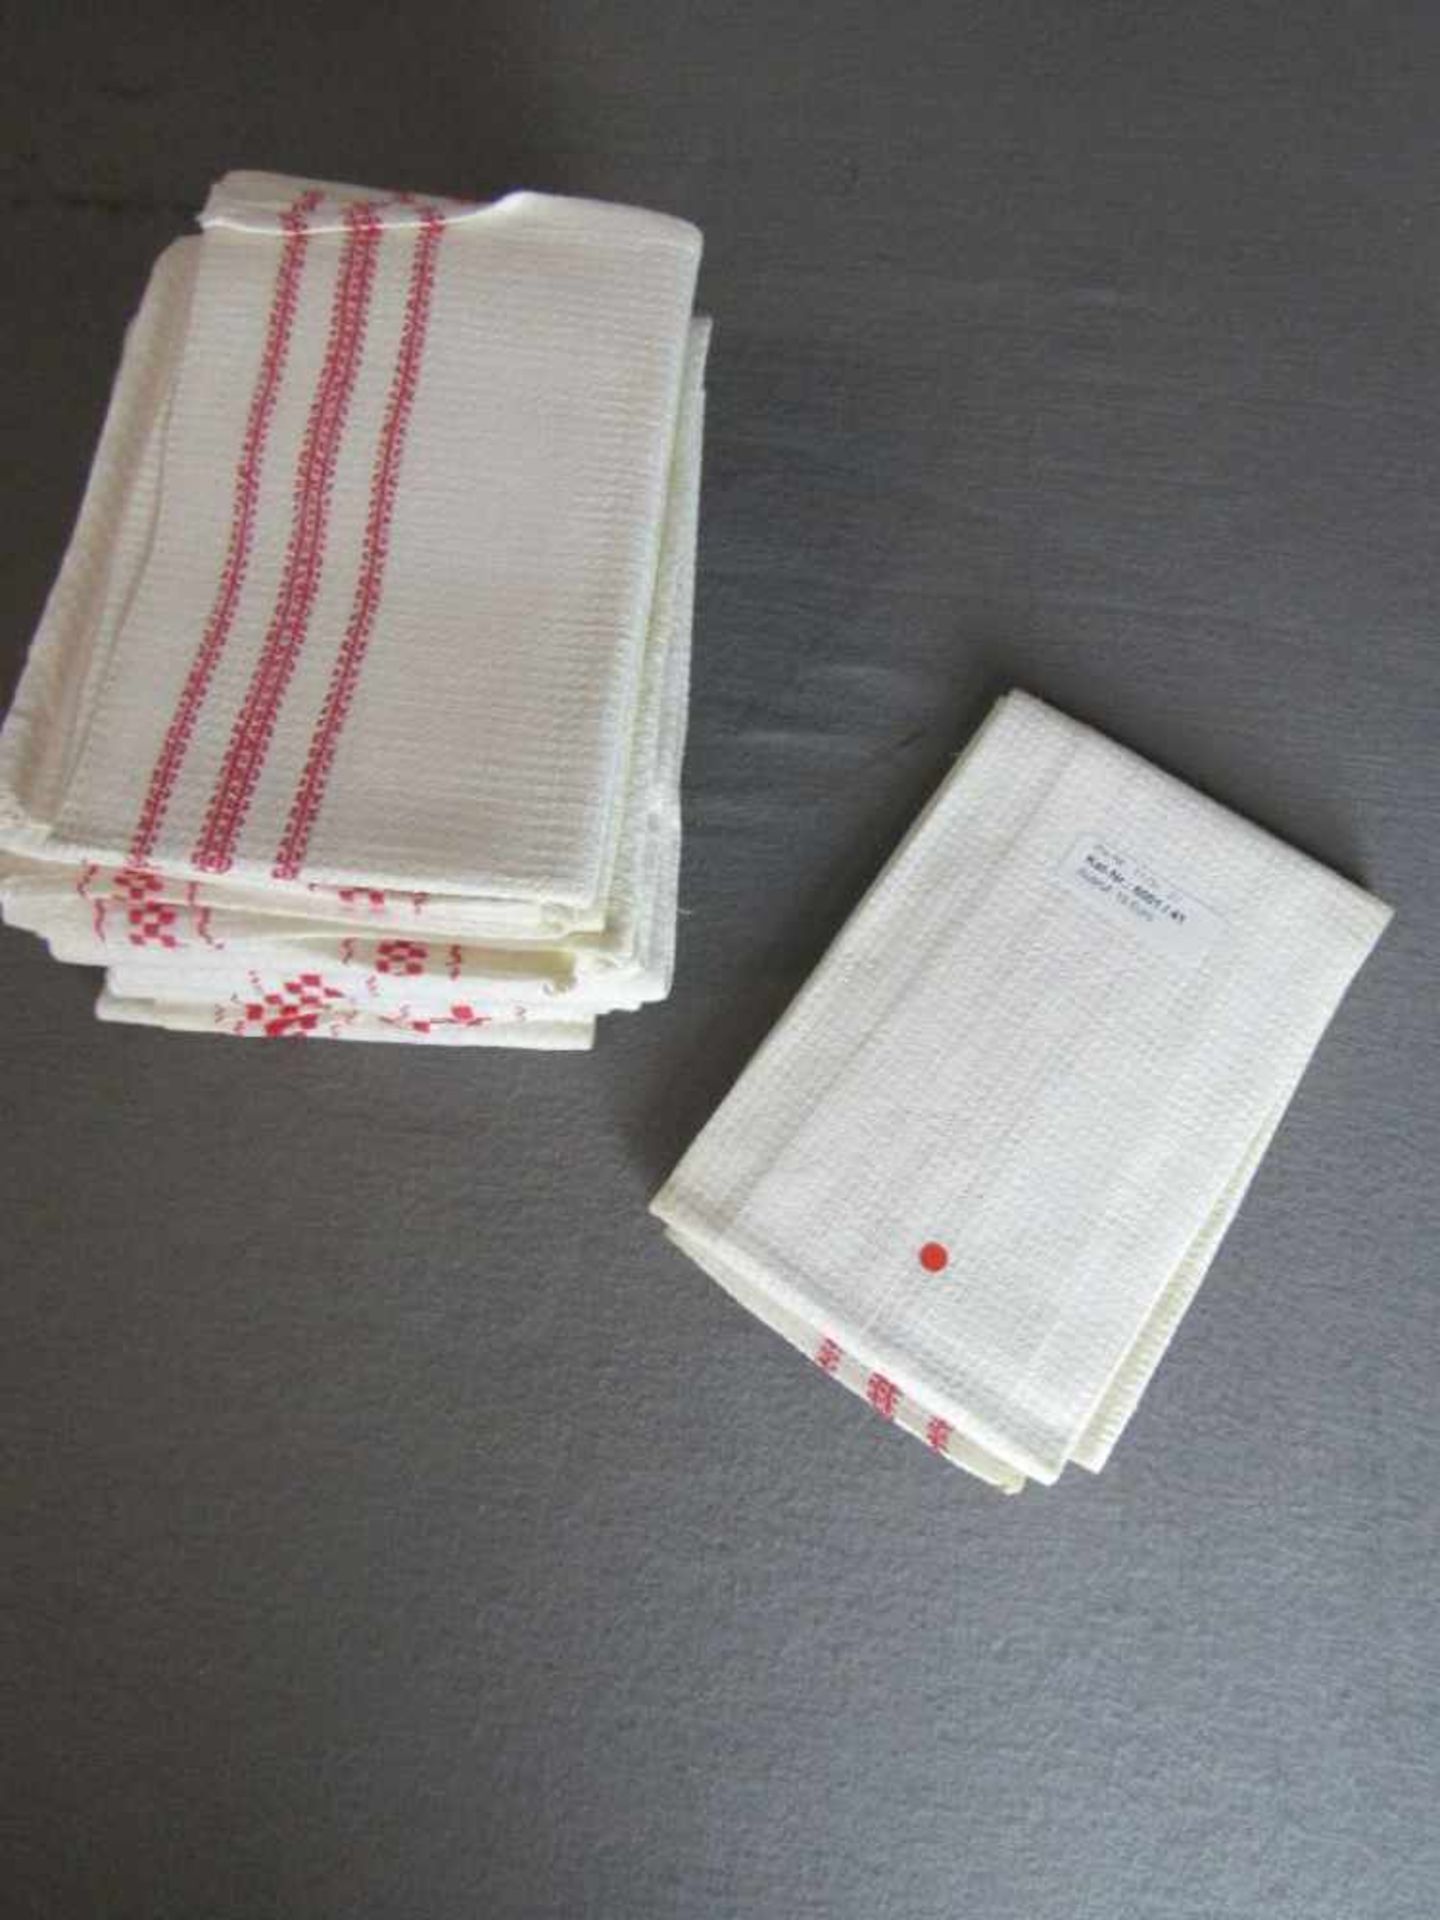 Konvolut Leinenhandtücher mit roter Bordüre